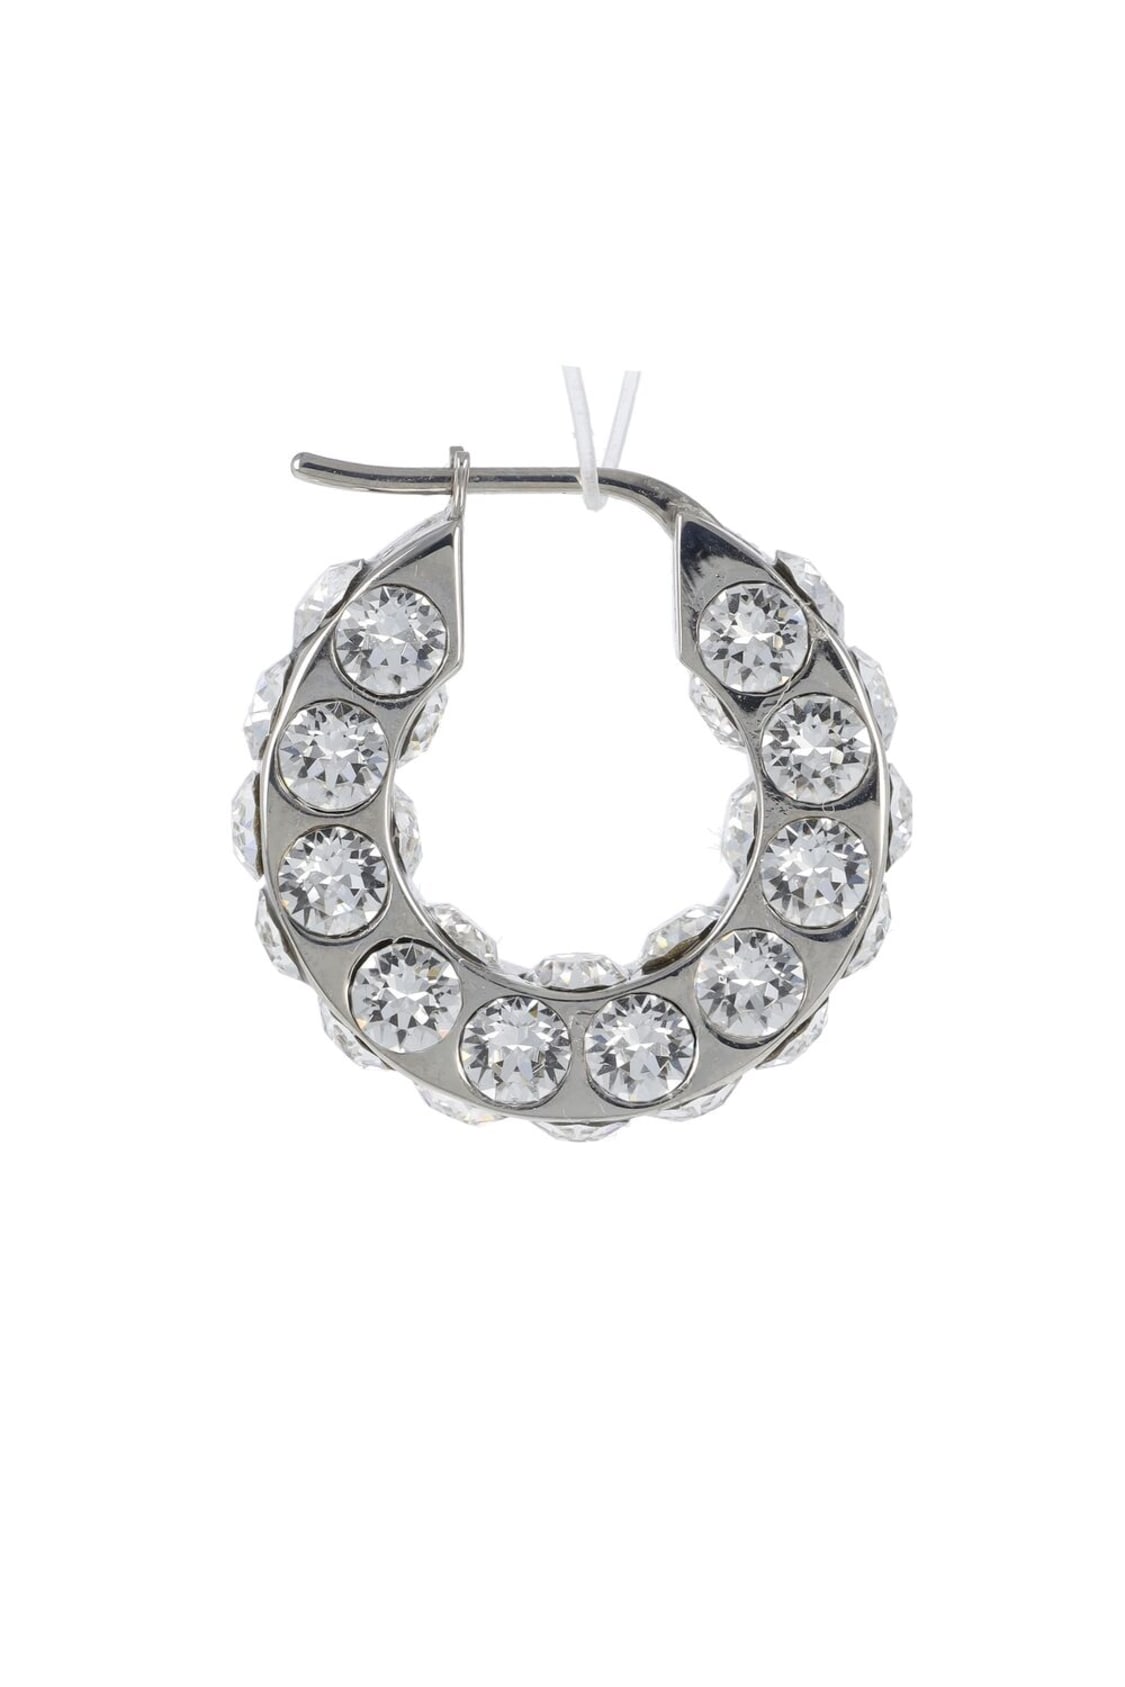 Amina Muaddi Jah Small Crystal Hoop Earrings In Silver